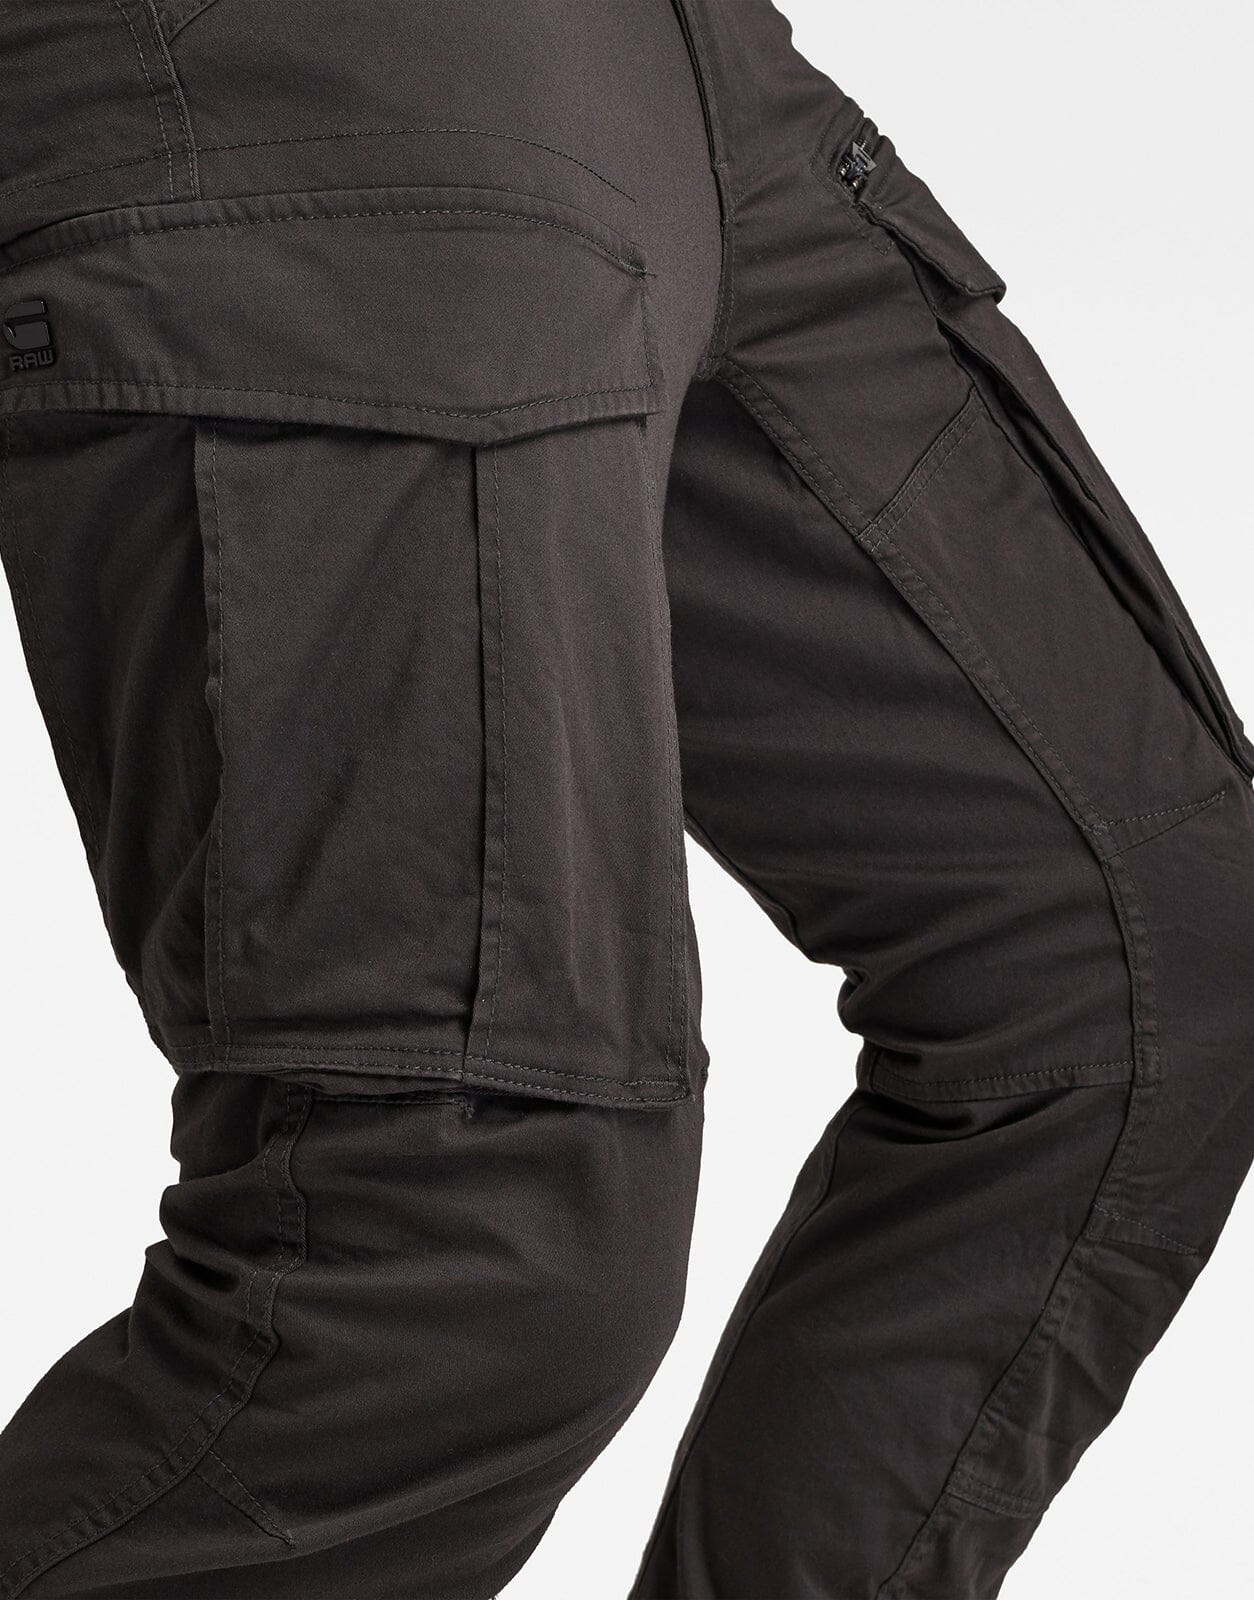 G-Star RAW Rovic Zip 3D Tapered Raven Cargo Pants - Subwear